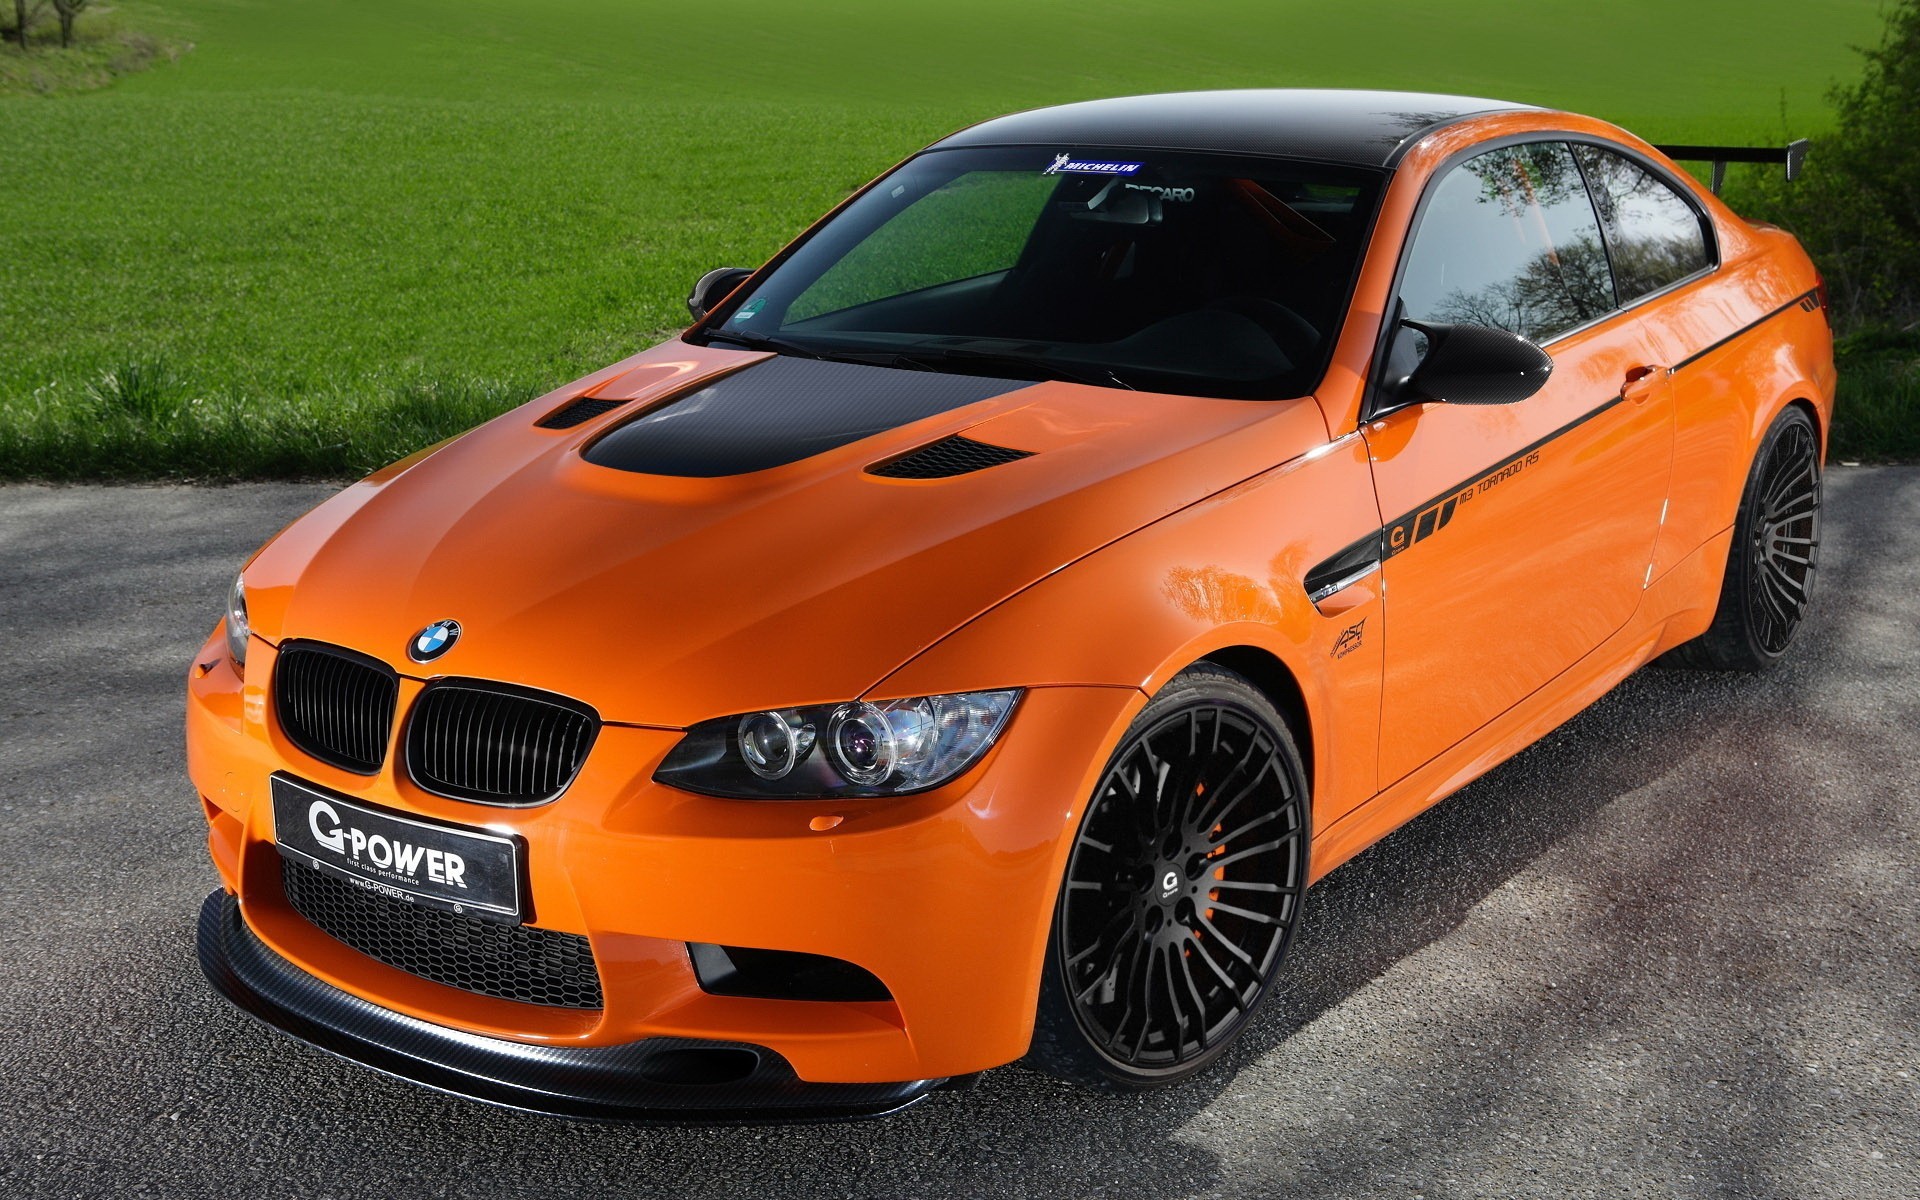 BMW M3, G Power, BMW, Orange Cars Wallpaper